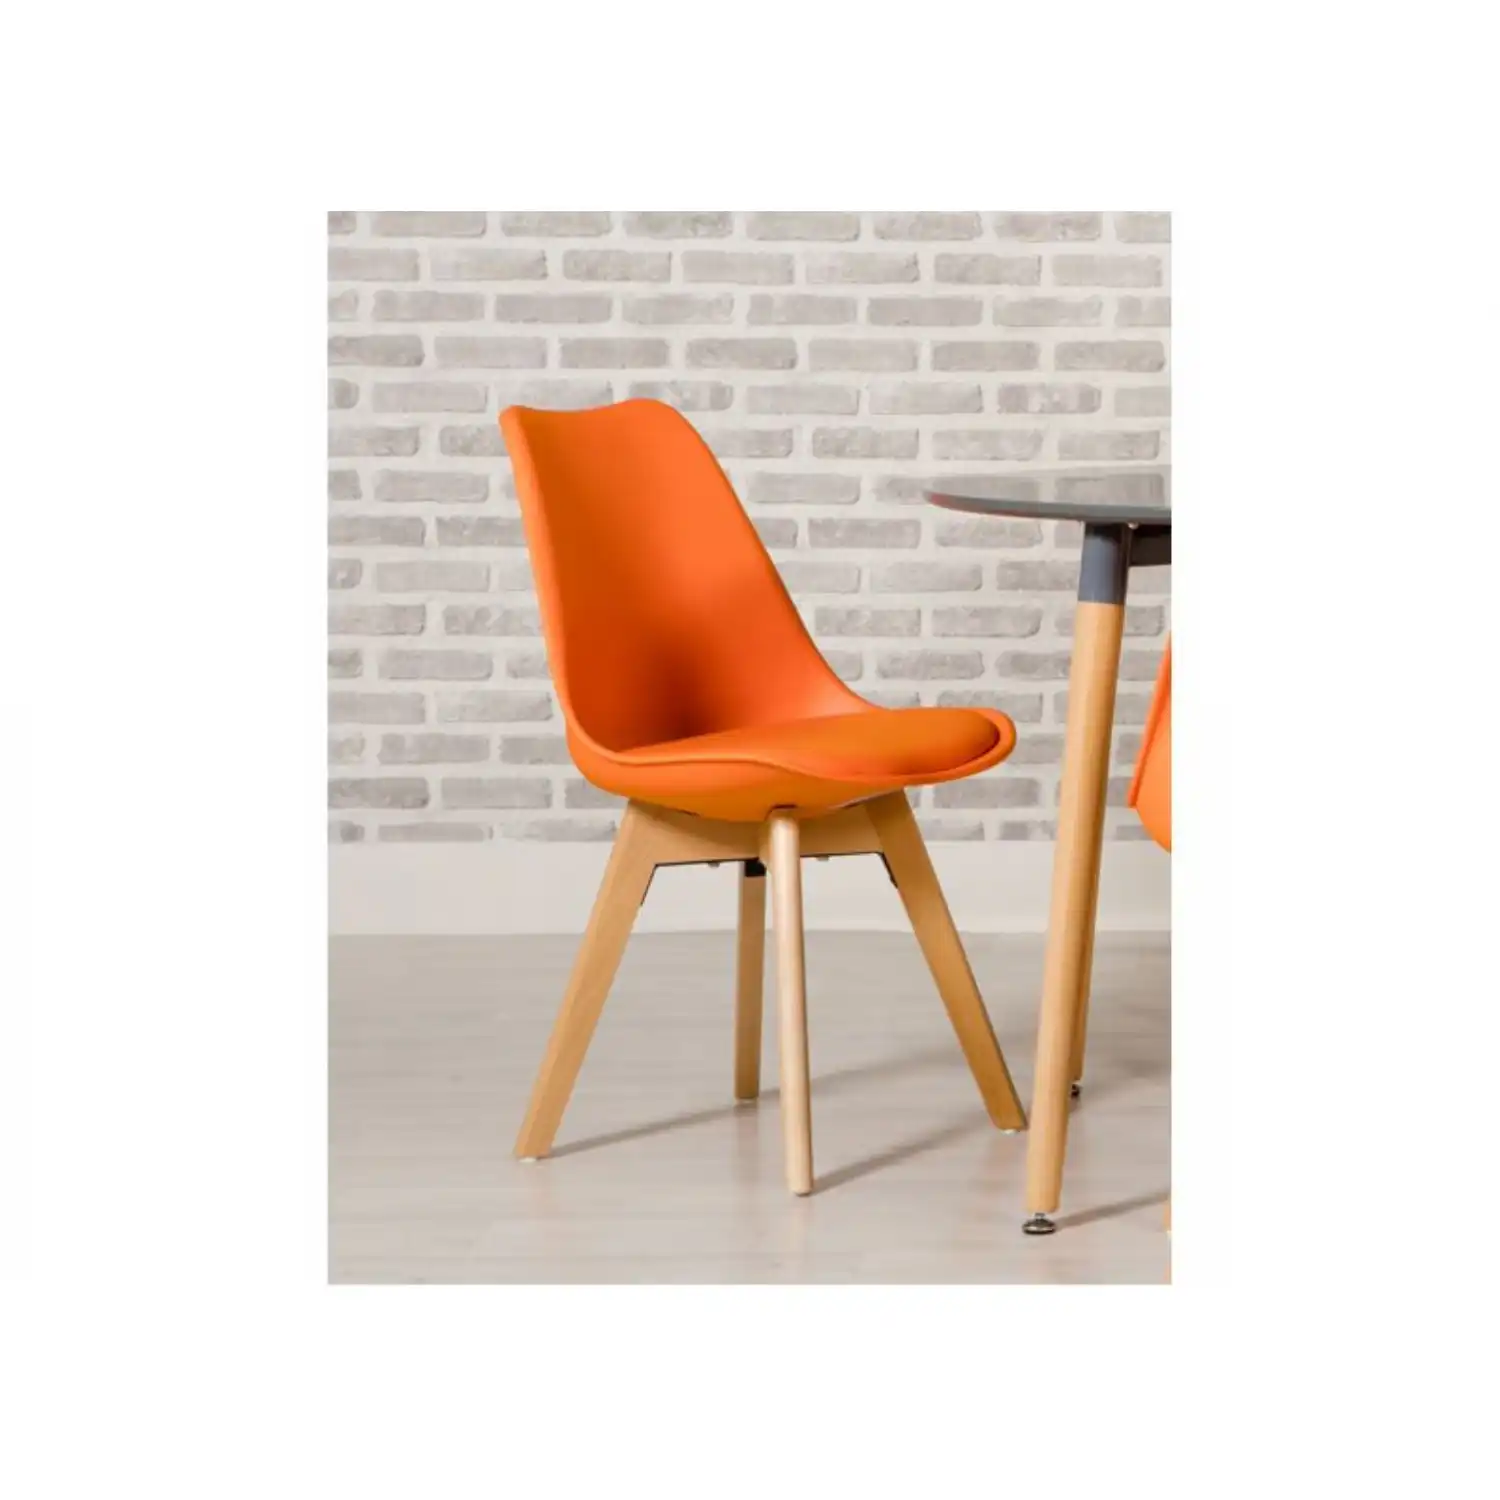 Orange PU Padded Seat Dining Chair Natural Beech Wood Legs